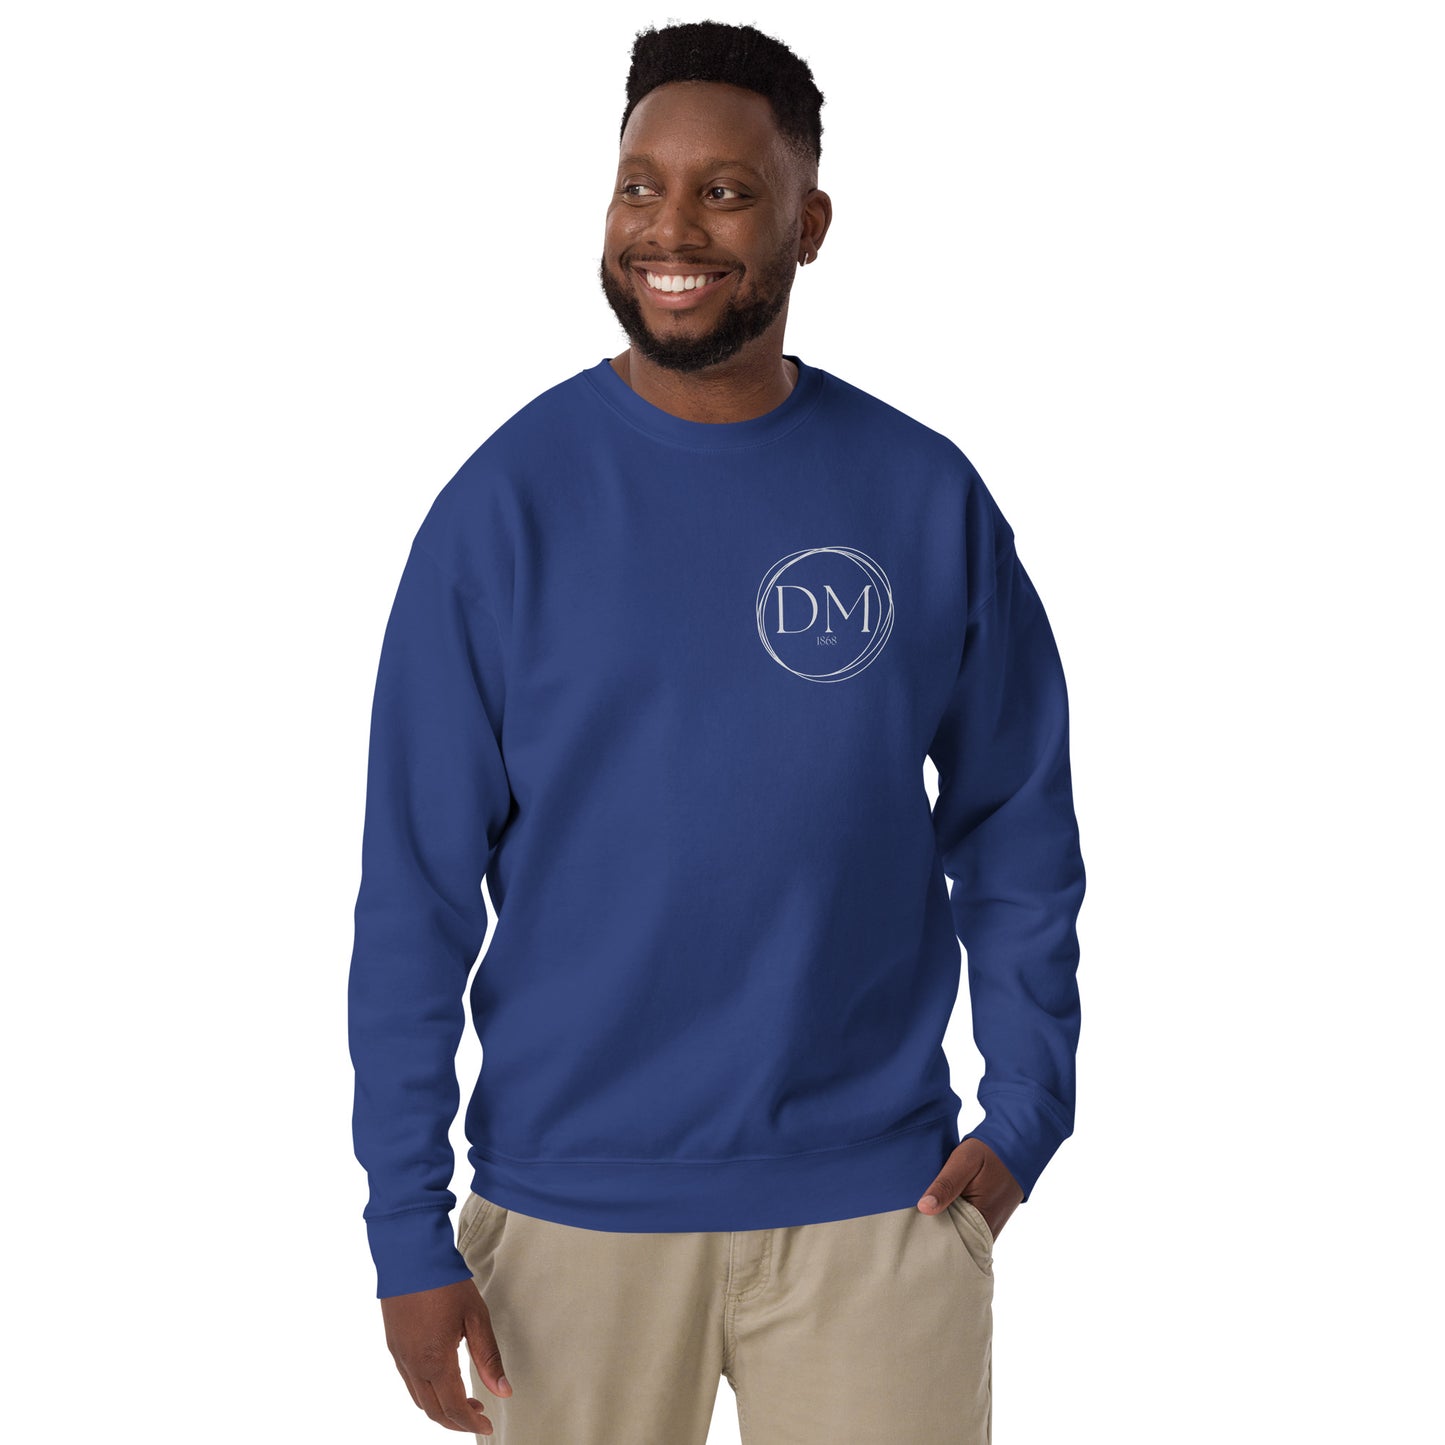 Defiance Missouri Unisex Premium Sweatshirt